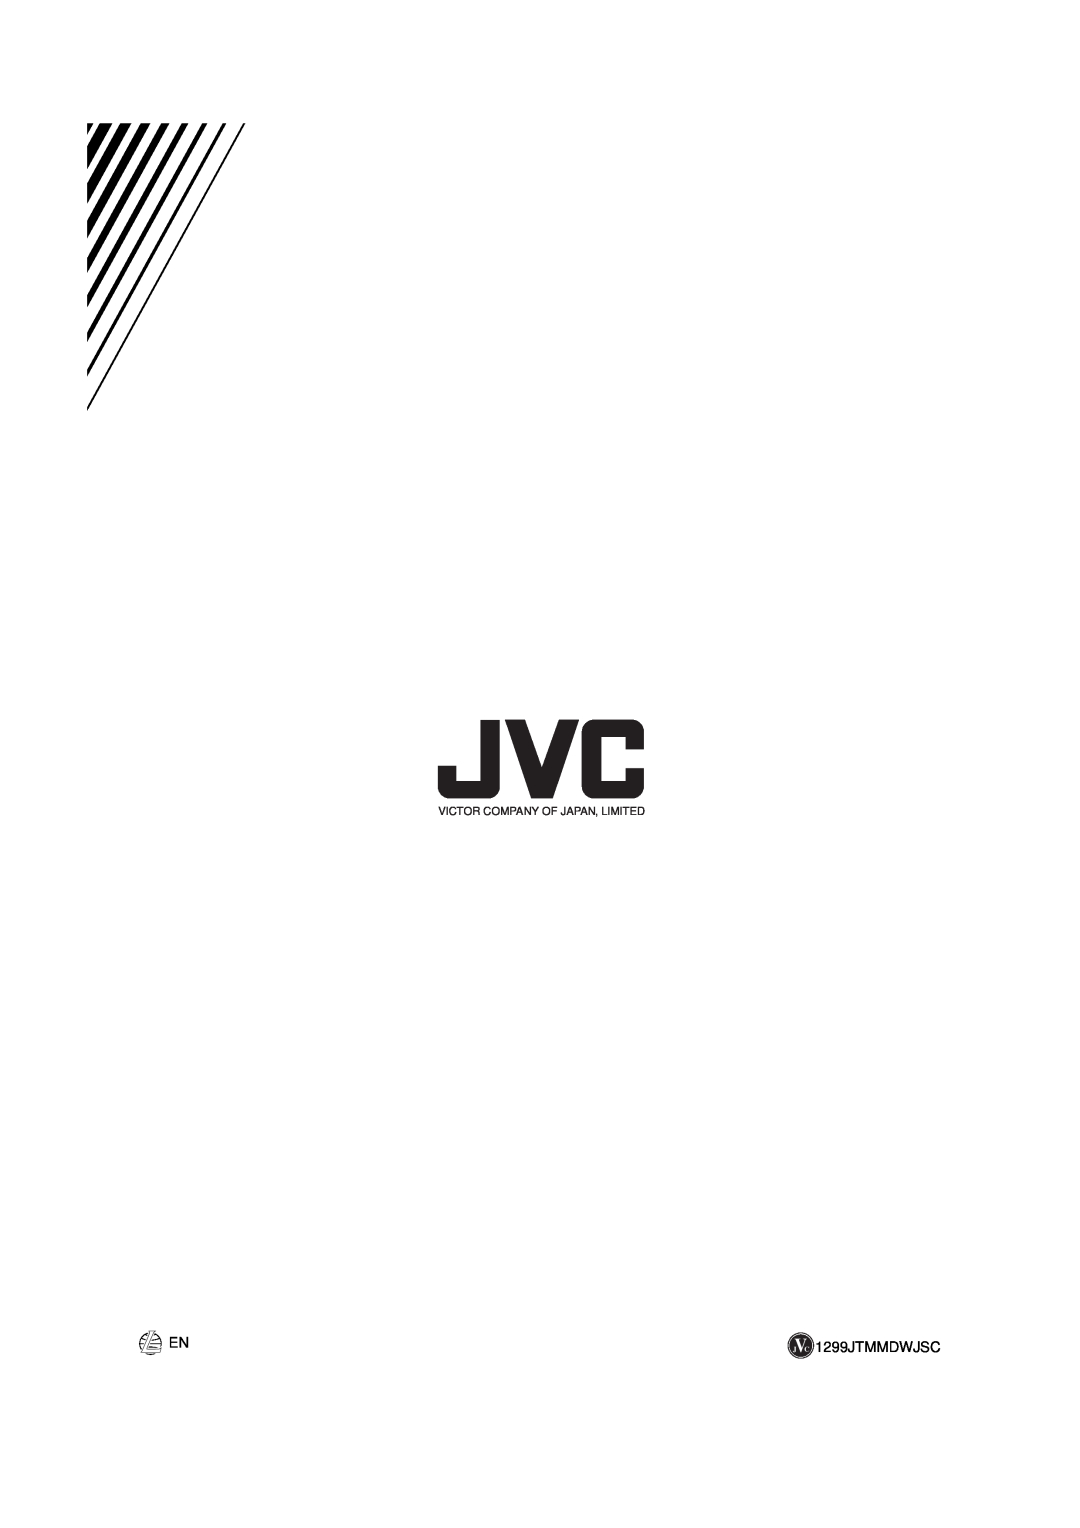 JVC XM-G6 manual 1299JTMMDWJSC, Victor Company Of Japan, Limited 